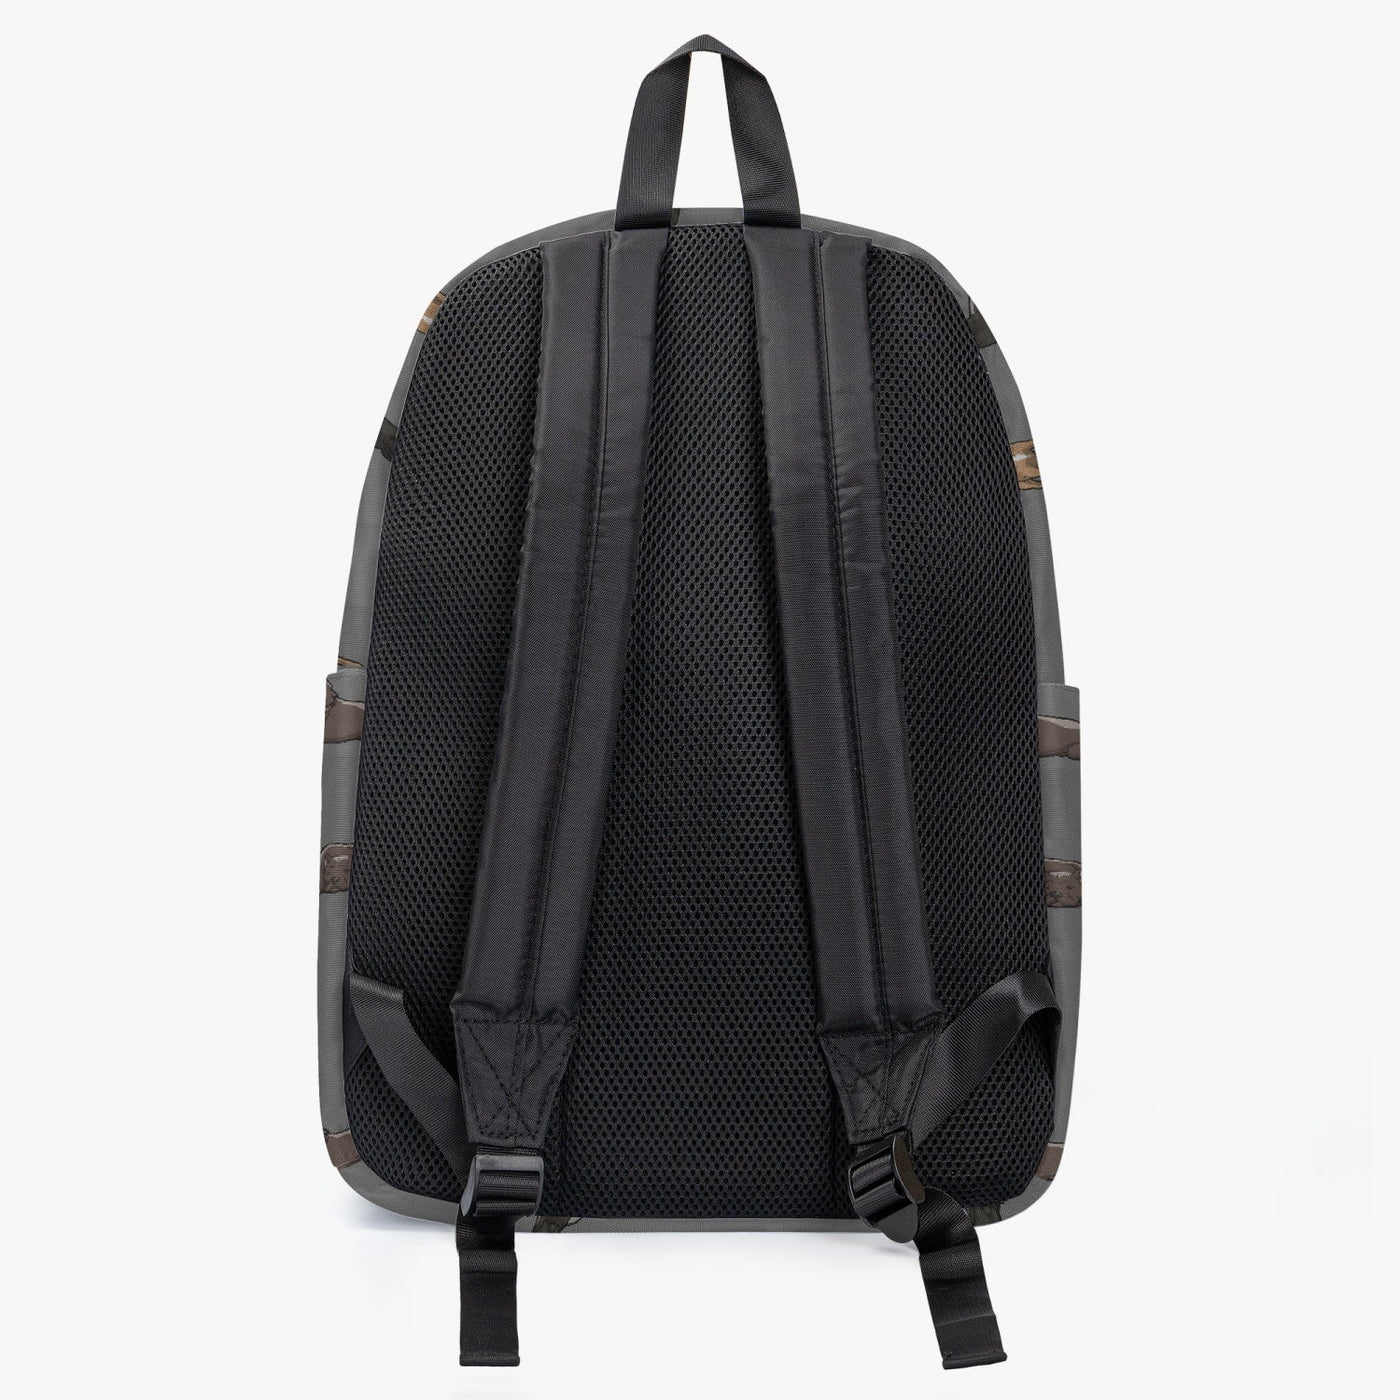 Cane Corso - Backpack